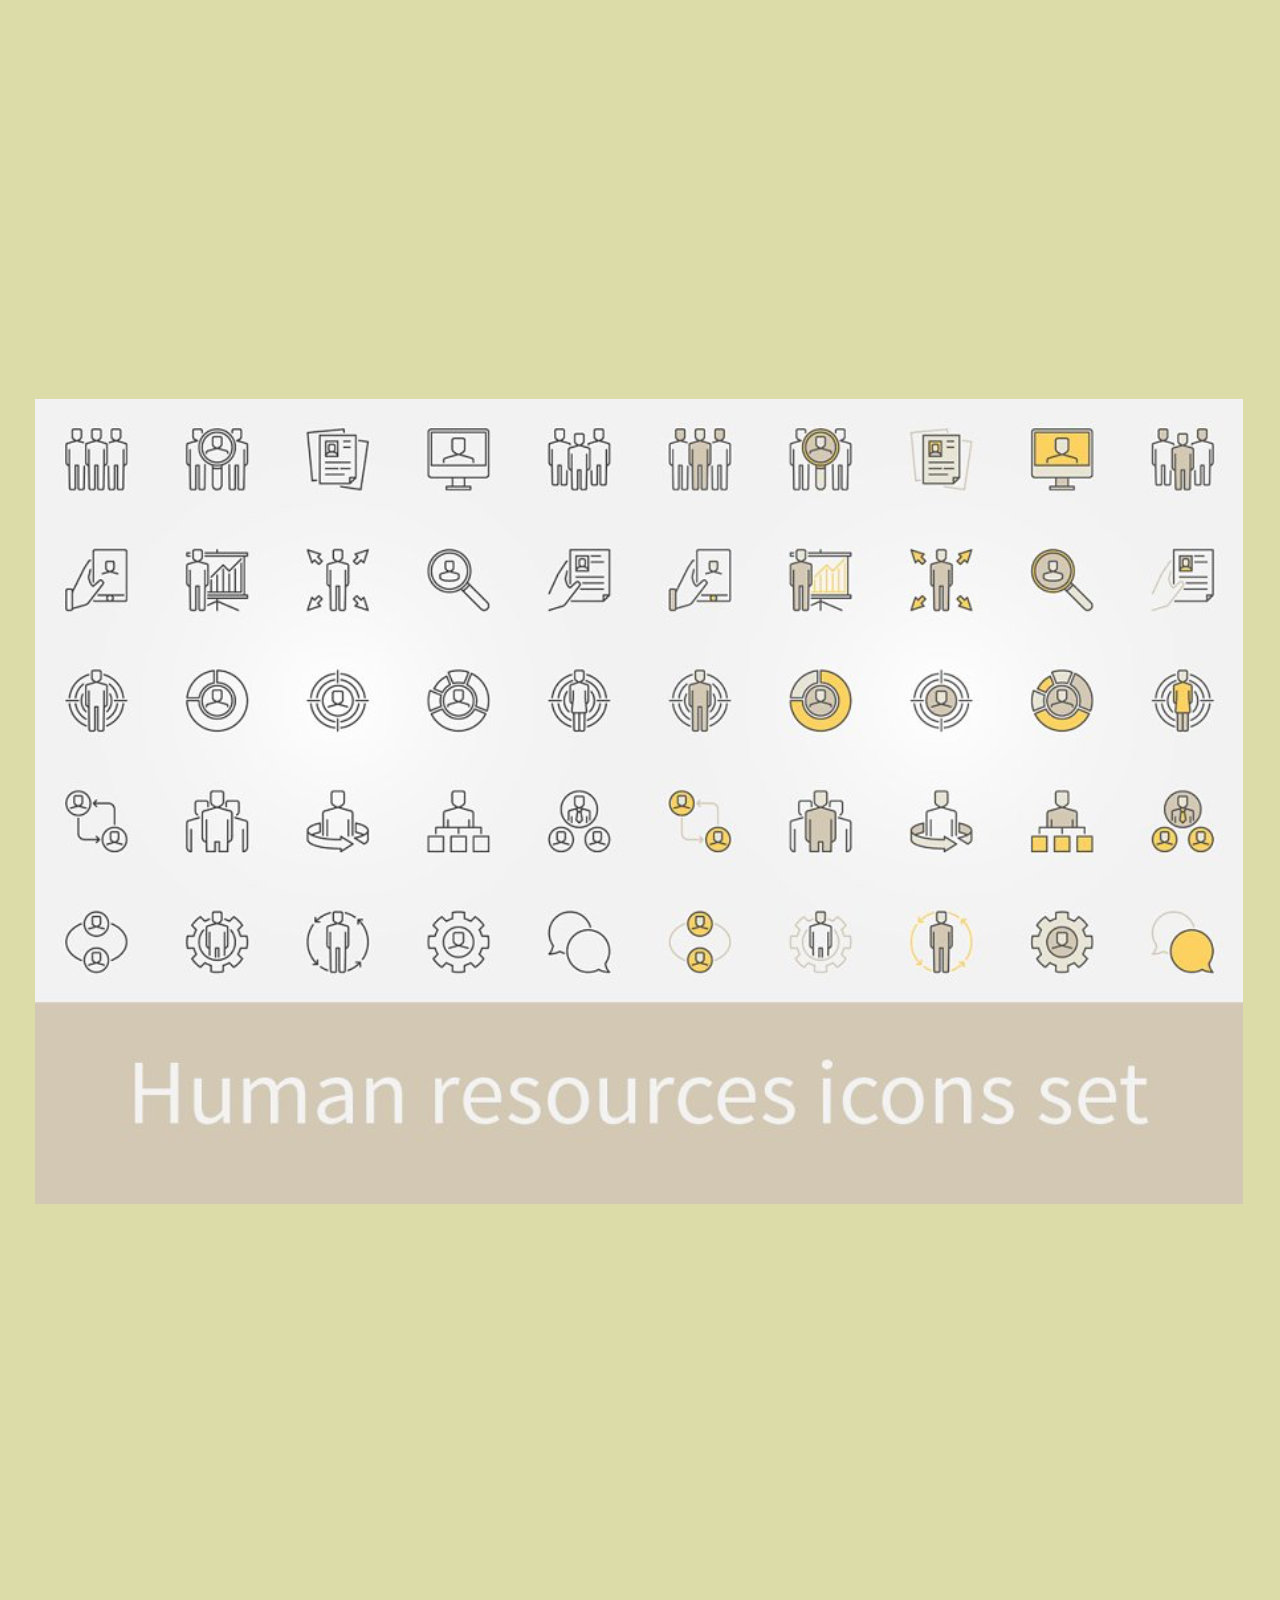 Human resources icons set pinterest image.